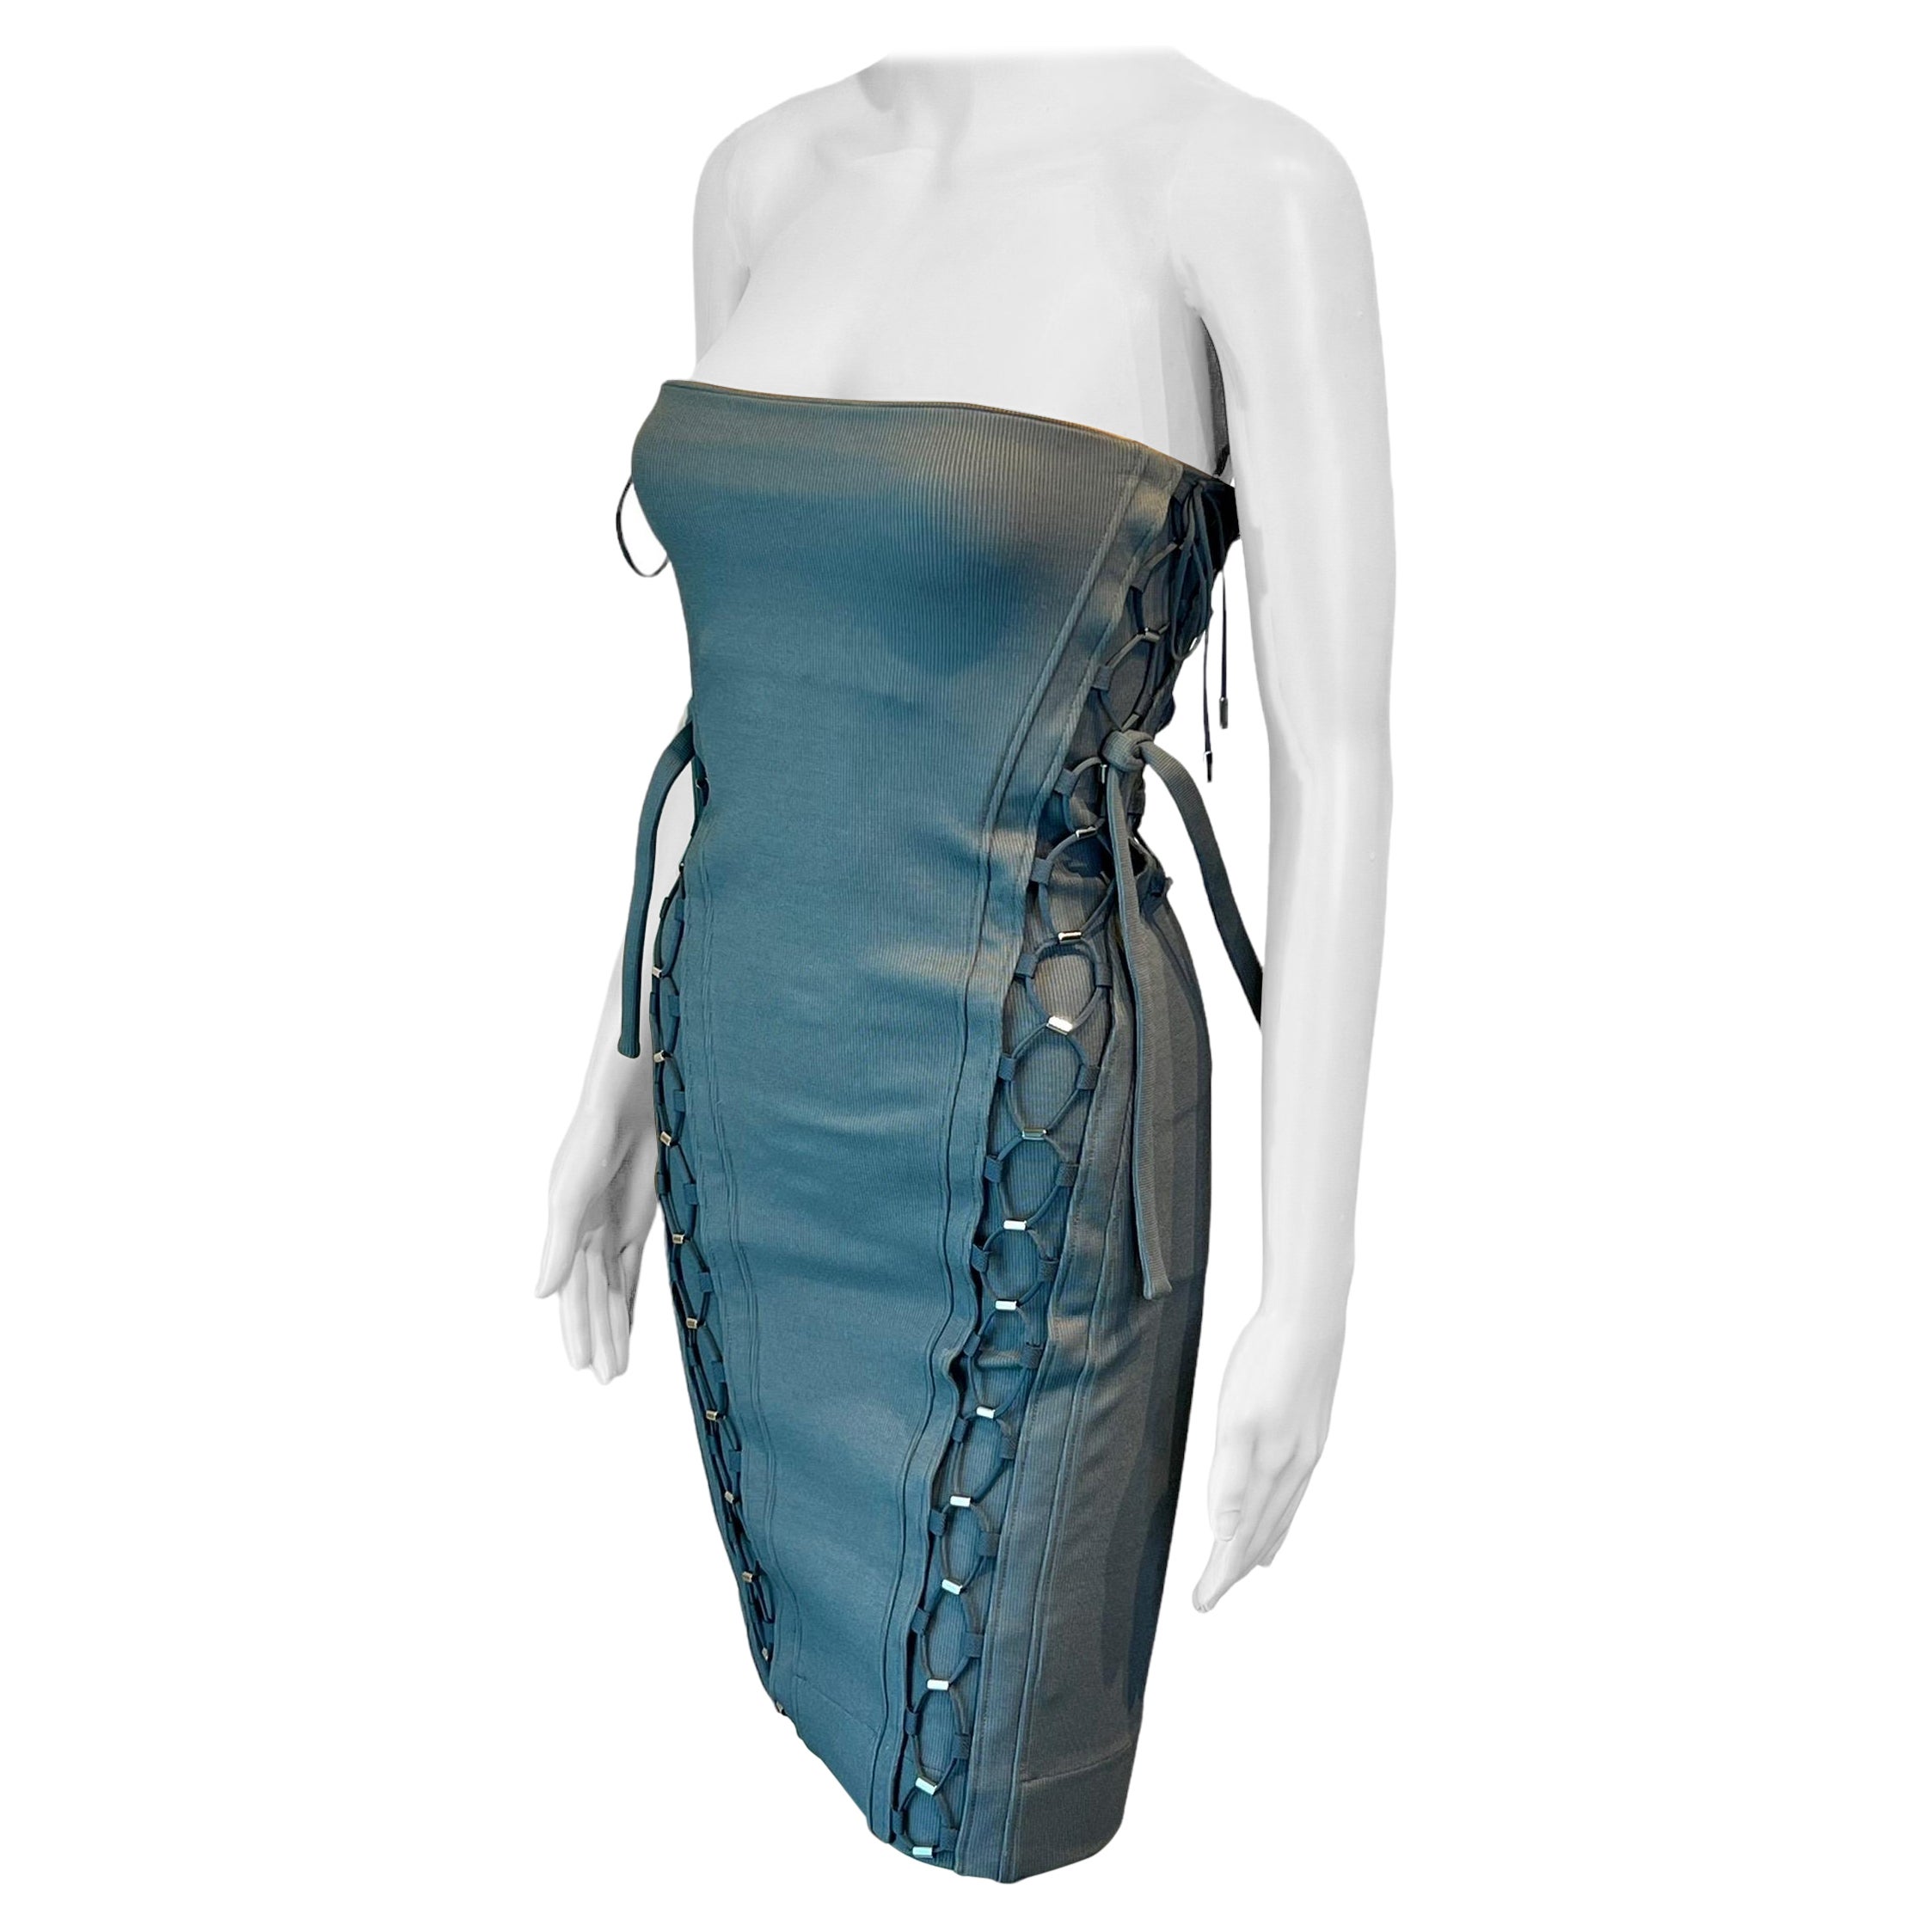 Gucci S/S 2010 Unworn Bodycon Lace Up Bandage Grey Mini Dress For Sale